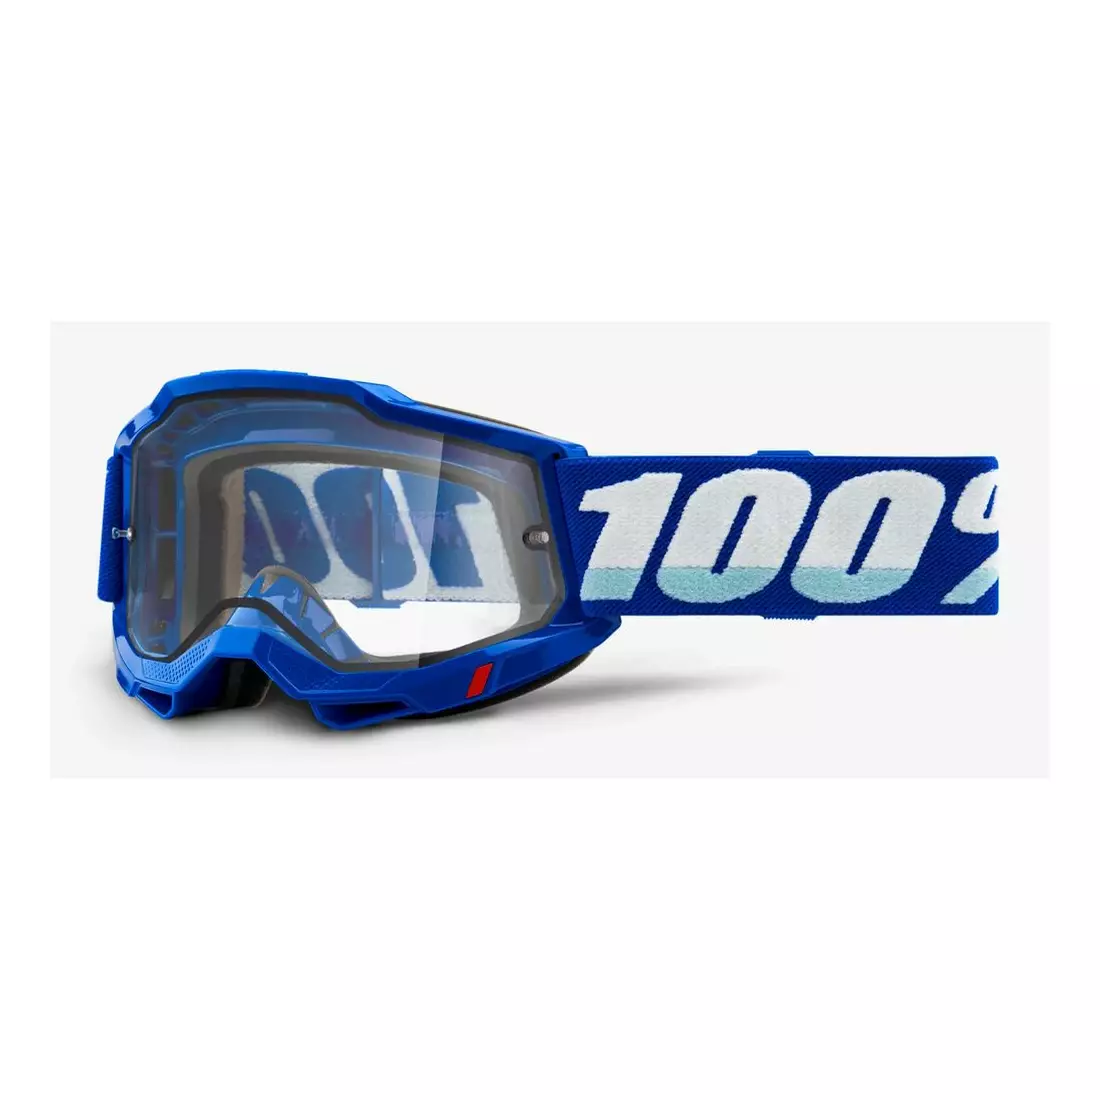 100% gogle rowerowe ACCURI 2 ENDURO MOTO BLUE (szyba przezroczysta podwójna) 1STO-50221-501-02